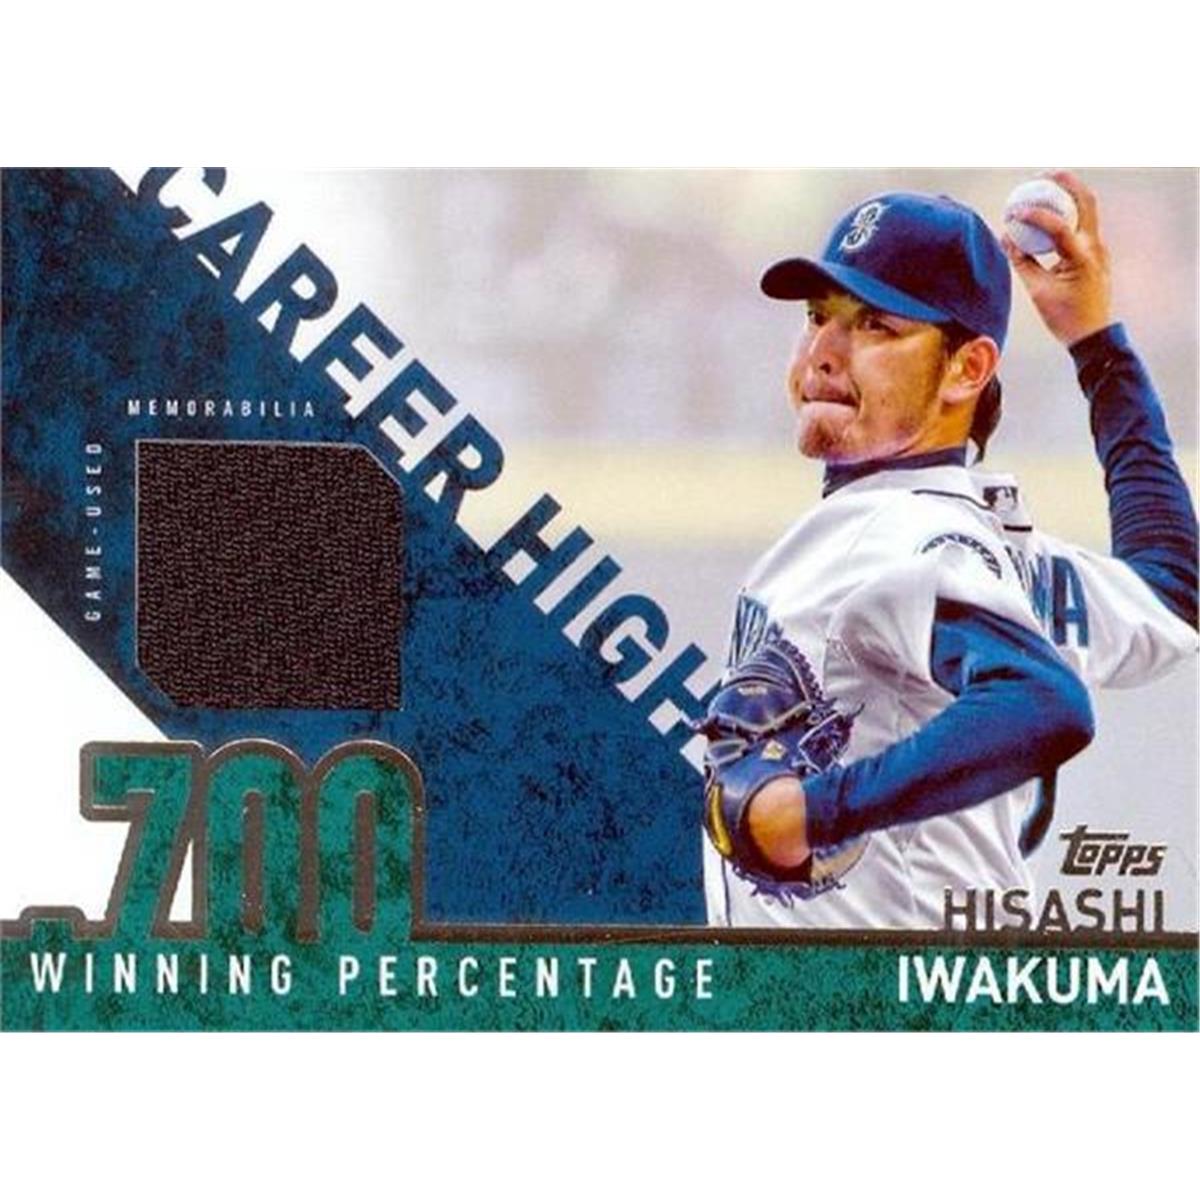 Picture of Autograph Warehouse 409152 Hisashi Iwakuma Player Worn Jersey Patch Baseball Card - 2015 Topps Career High-CRHHI